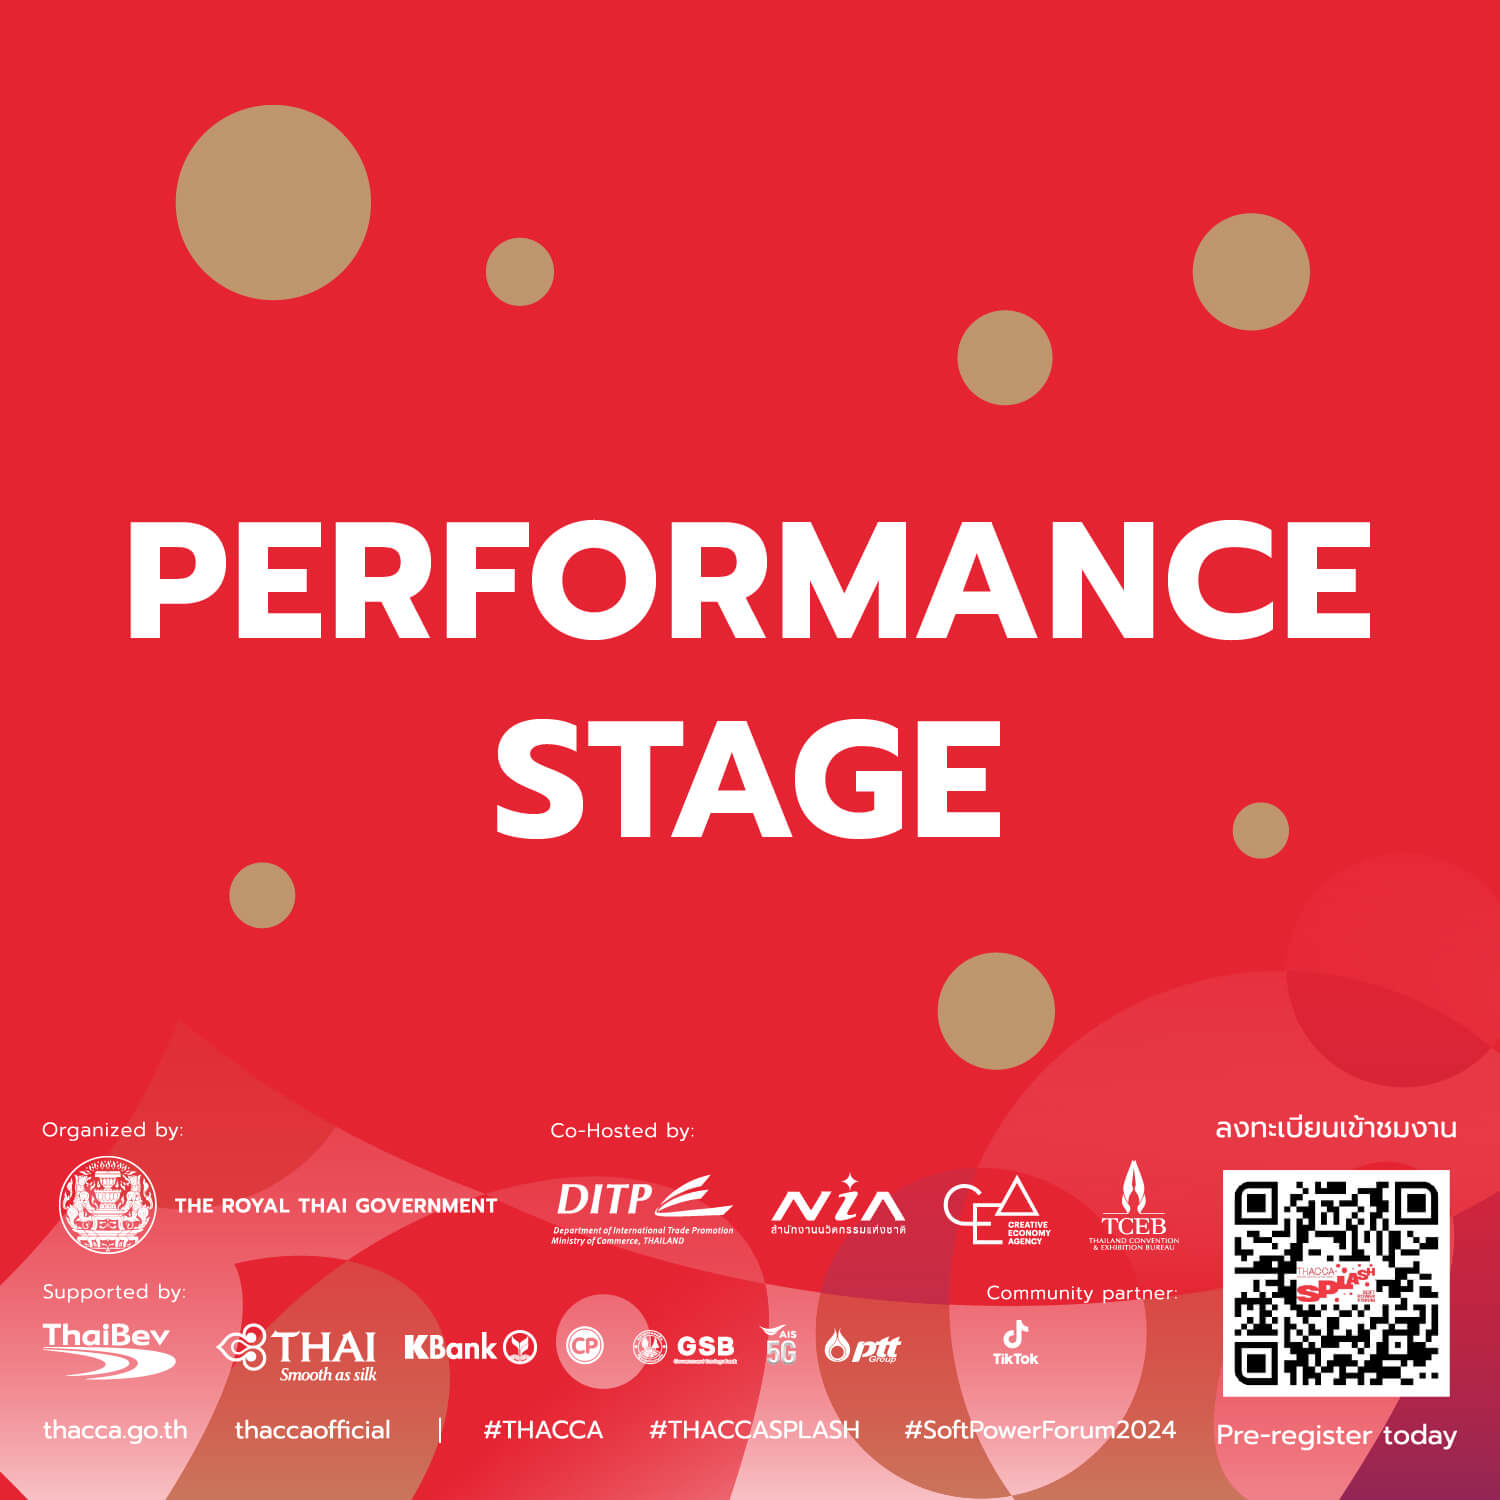 Performance Stage เวทีสำหรับอุตสาหกรรมที่มีฐานแฟนคลับ กลุ่มนักแสดง นักเขียน นักดนตรี มาพบปะกัน และแสดงความสามารถด้านต่างๆ เพื่อส่งเสริมและสนับสนุนผลงานของศิลปิน